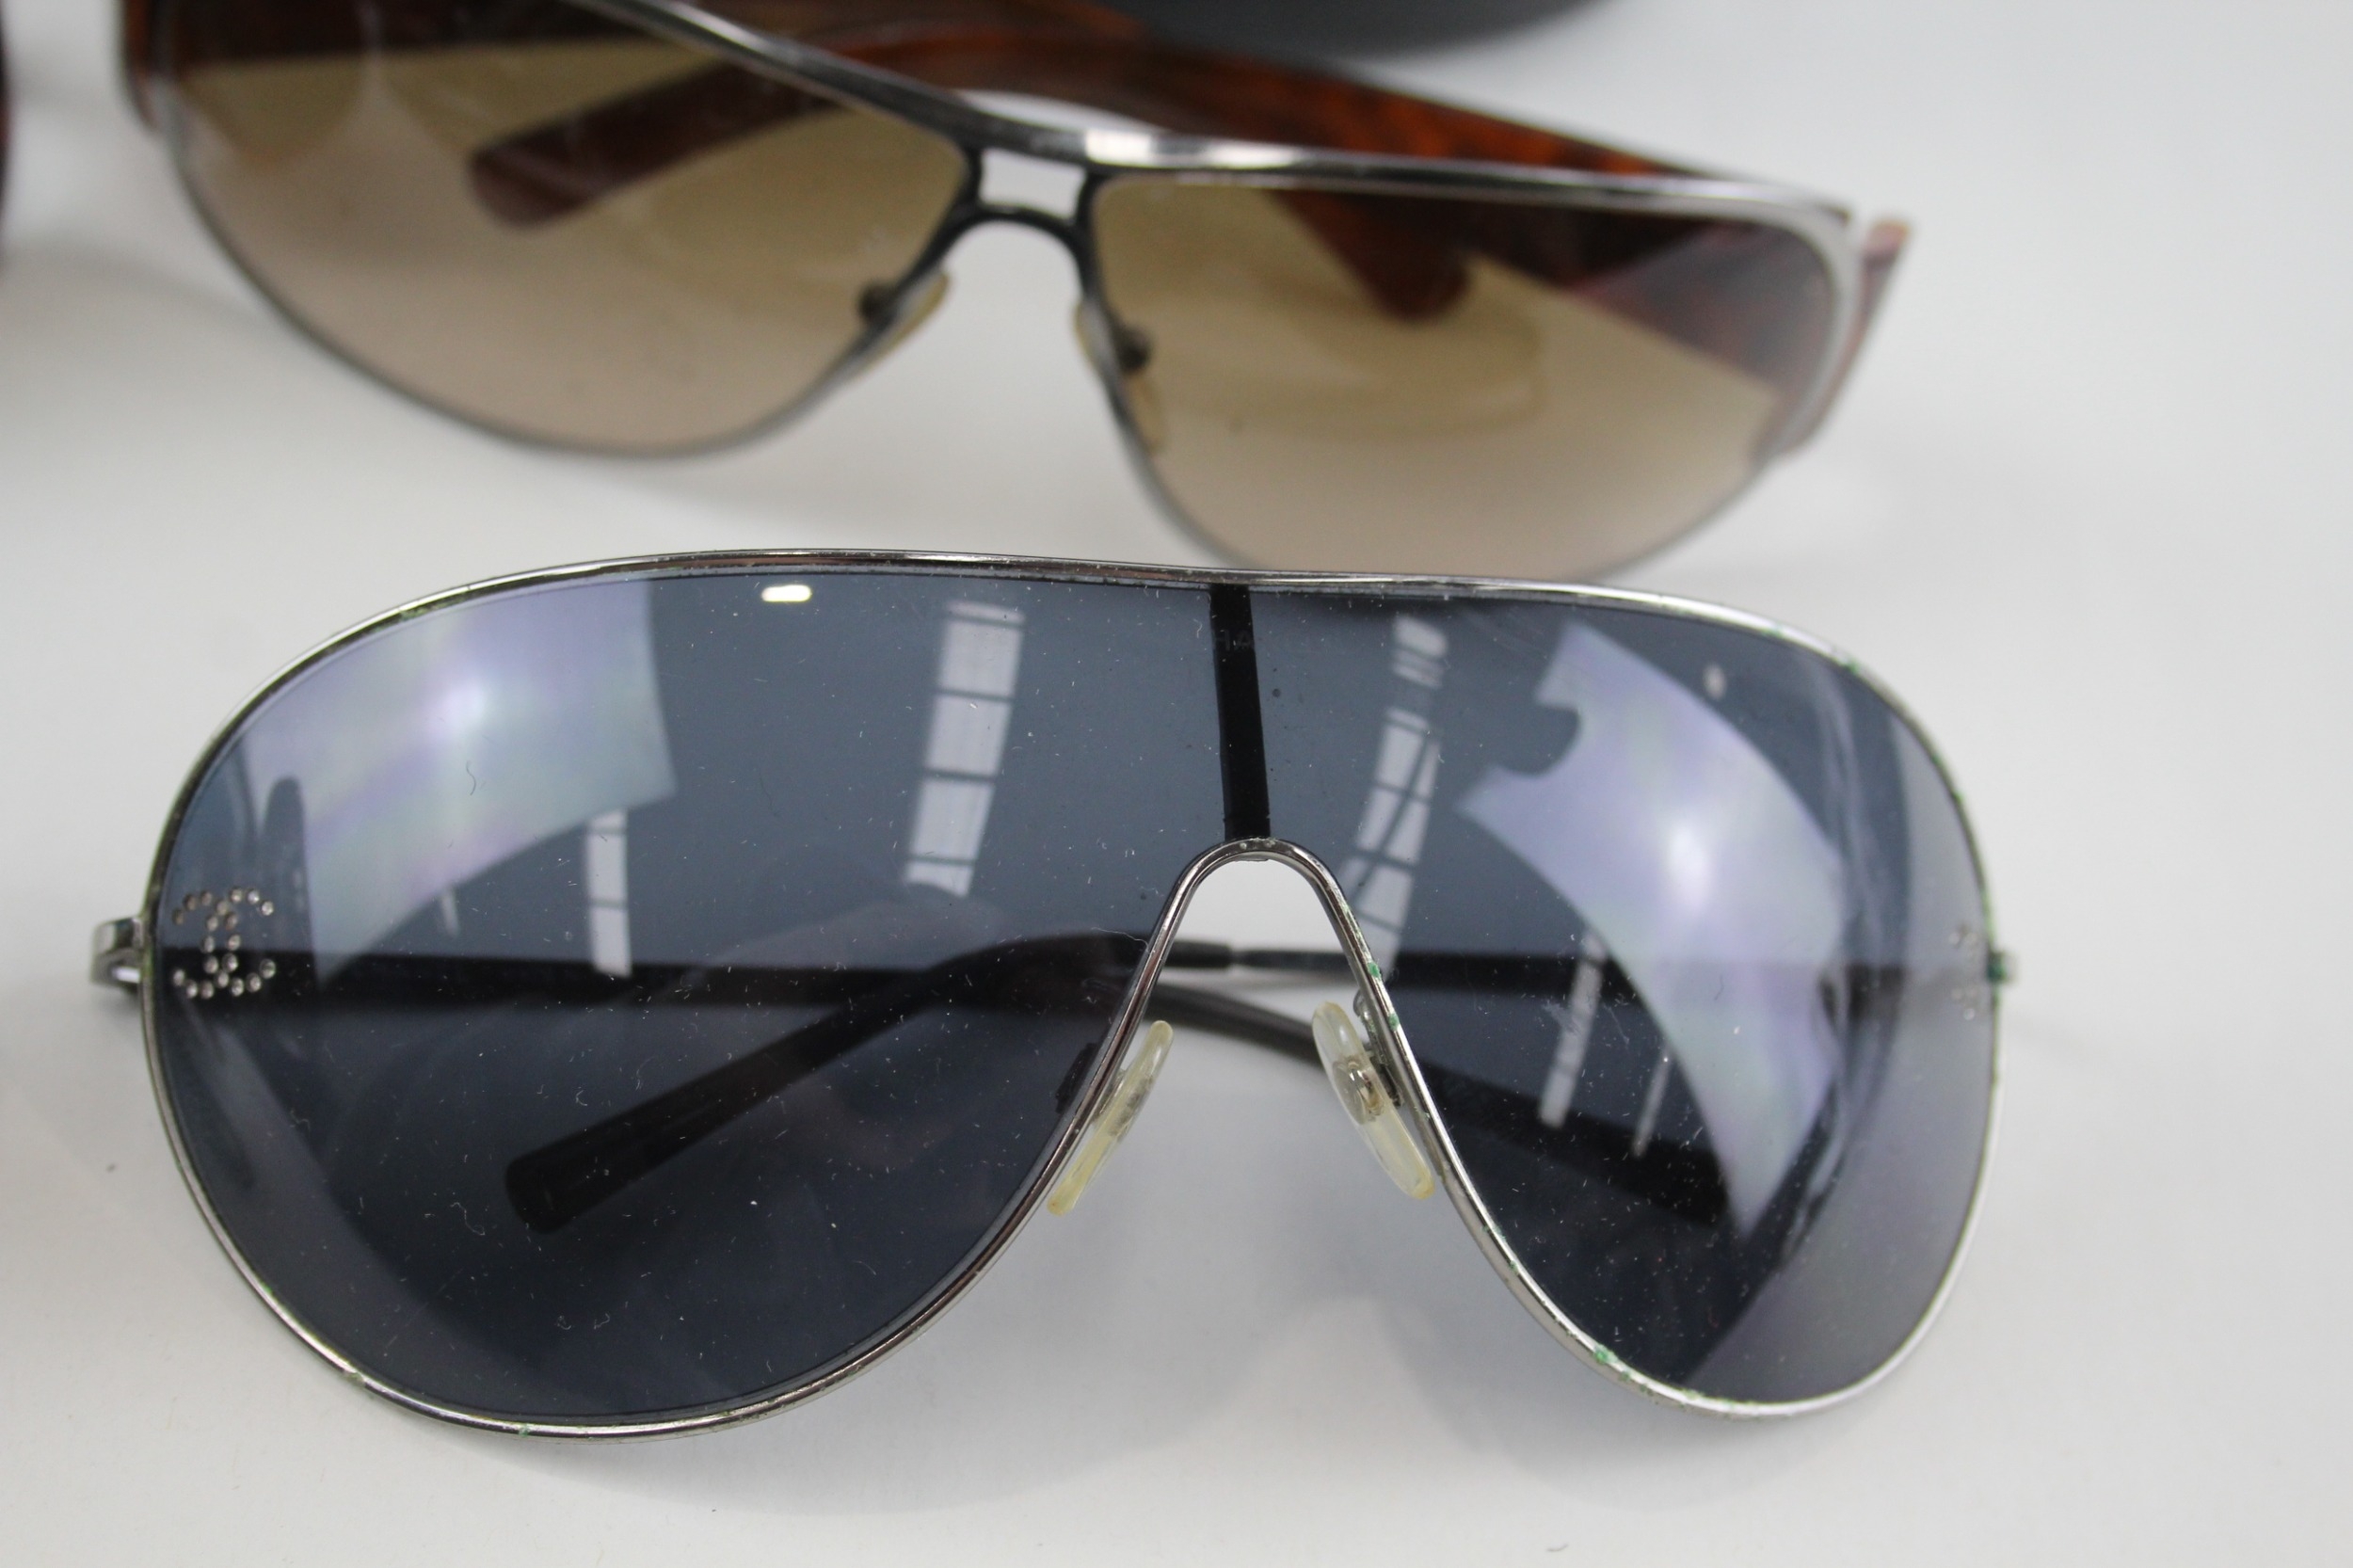 Sunglasses Designer Glasses Inc Chanel, Prada, Versace x 4 - Image 5 of 5